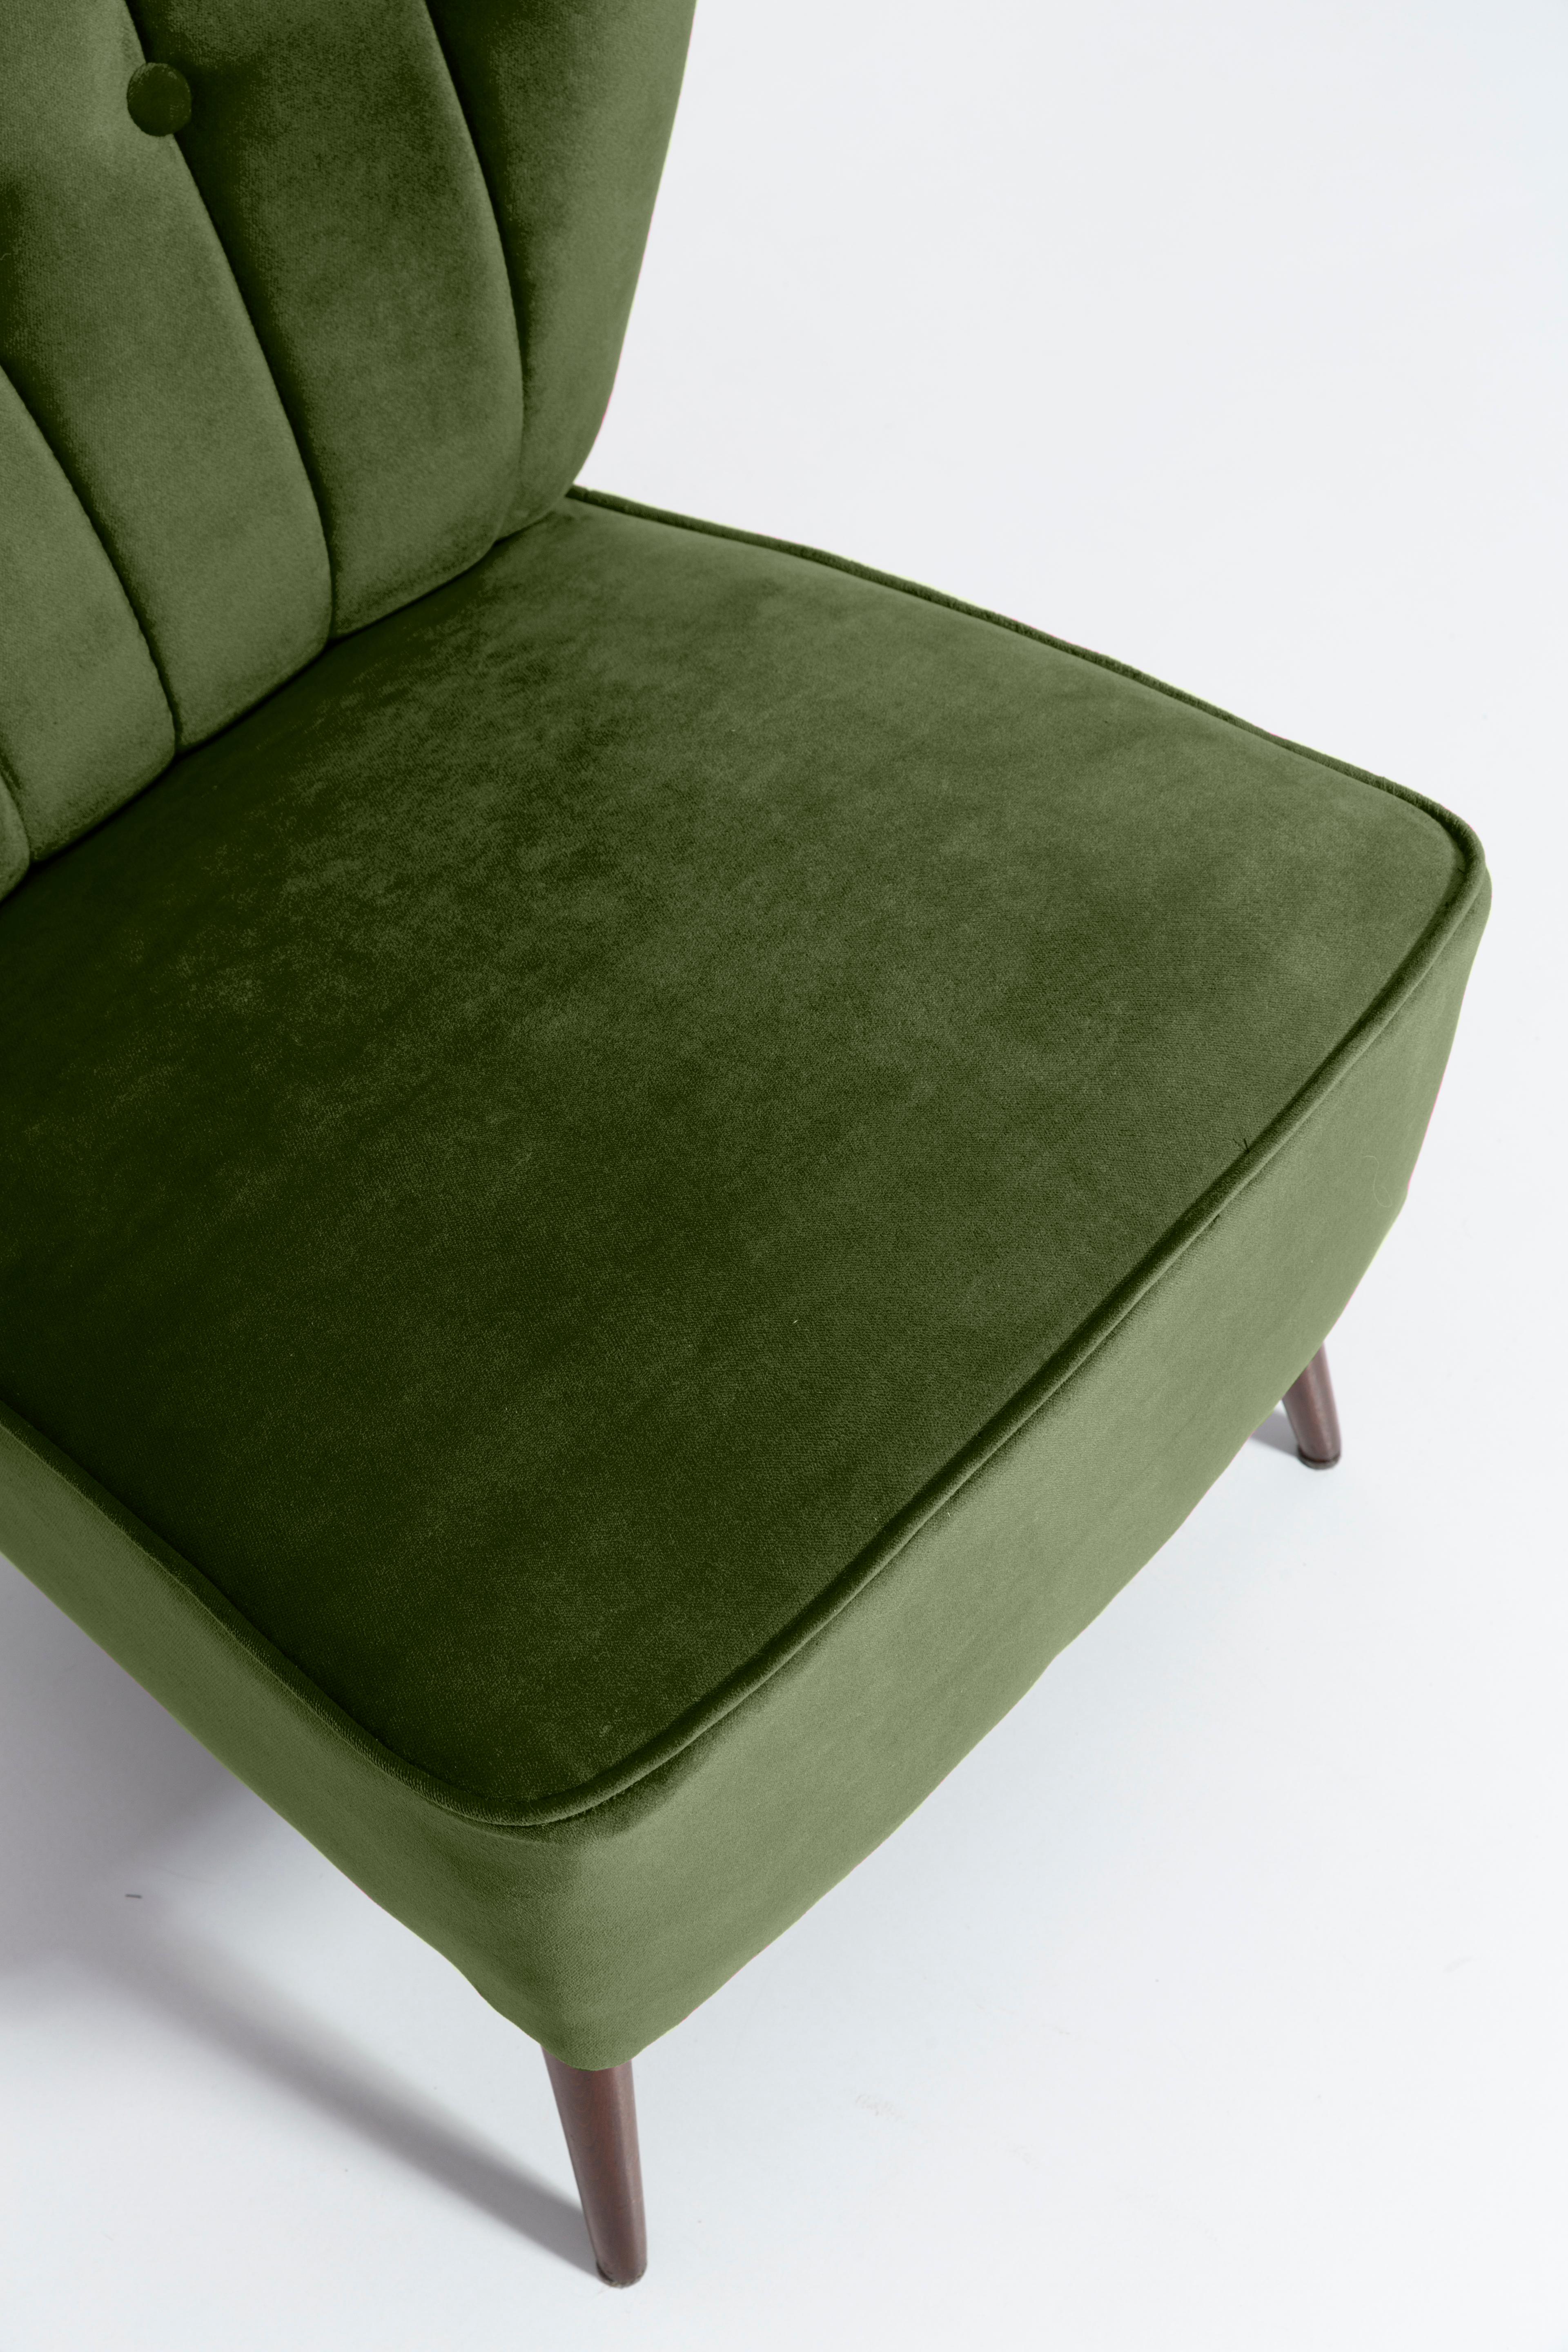 Midcentury Green Velvet Club Armchair, Europe, 1960s For Sale 4